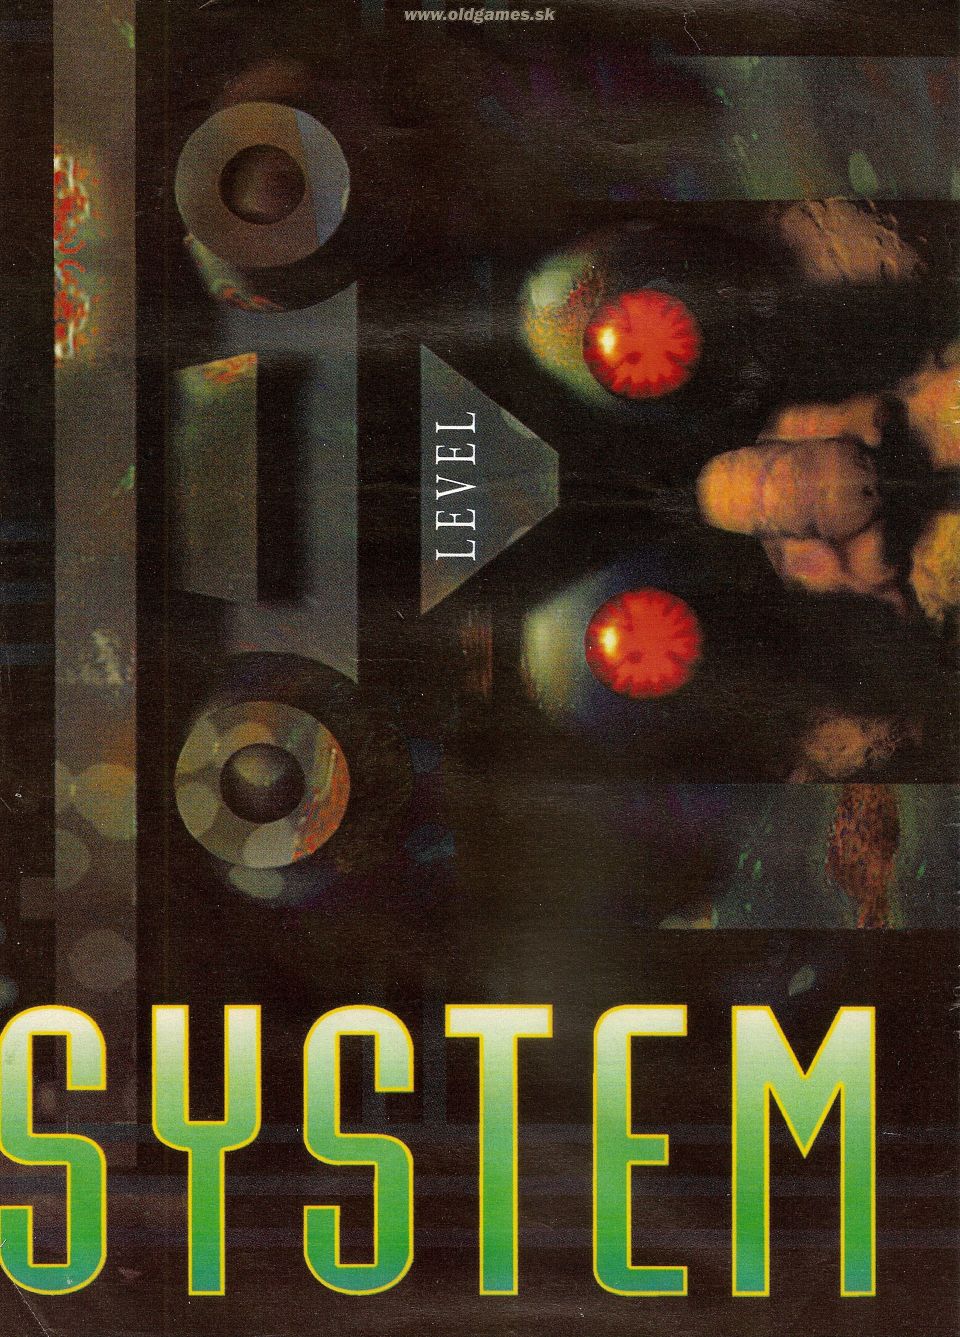 Poster: System Shock